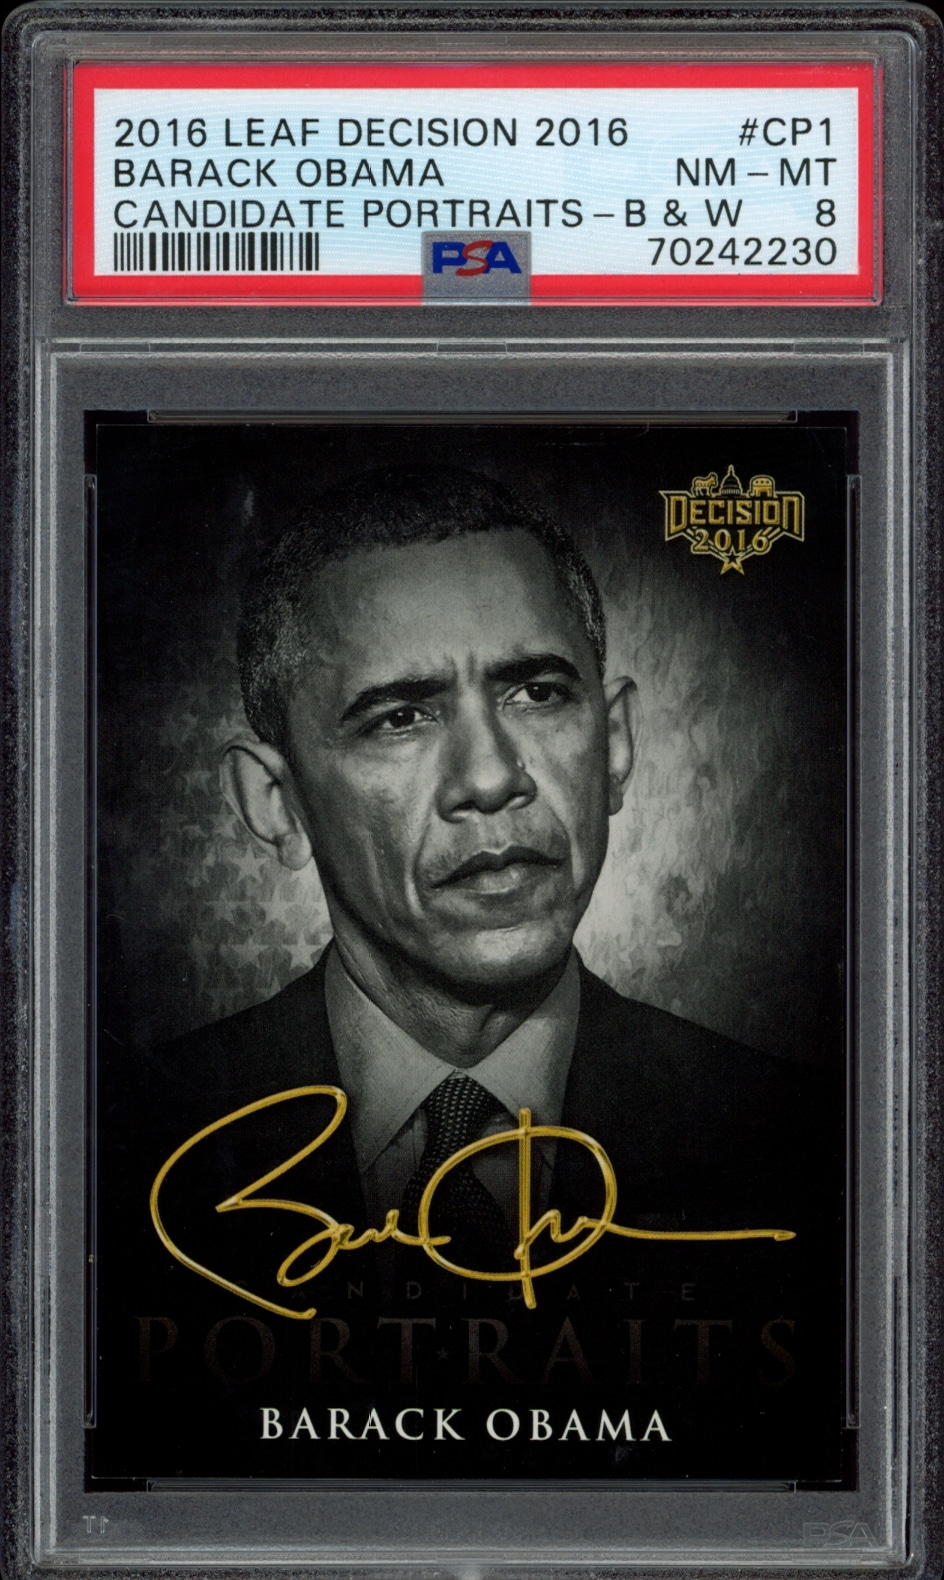 Graded 2016 Leaf Decision card featuring black & white portrait of Barack Obama, PSA 8.